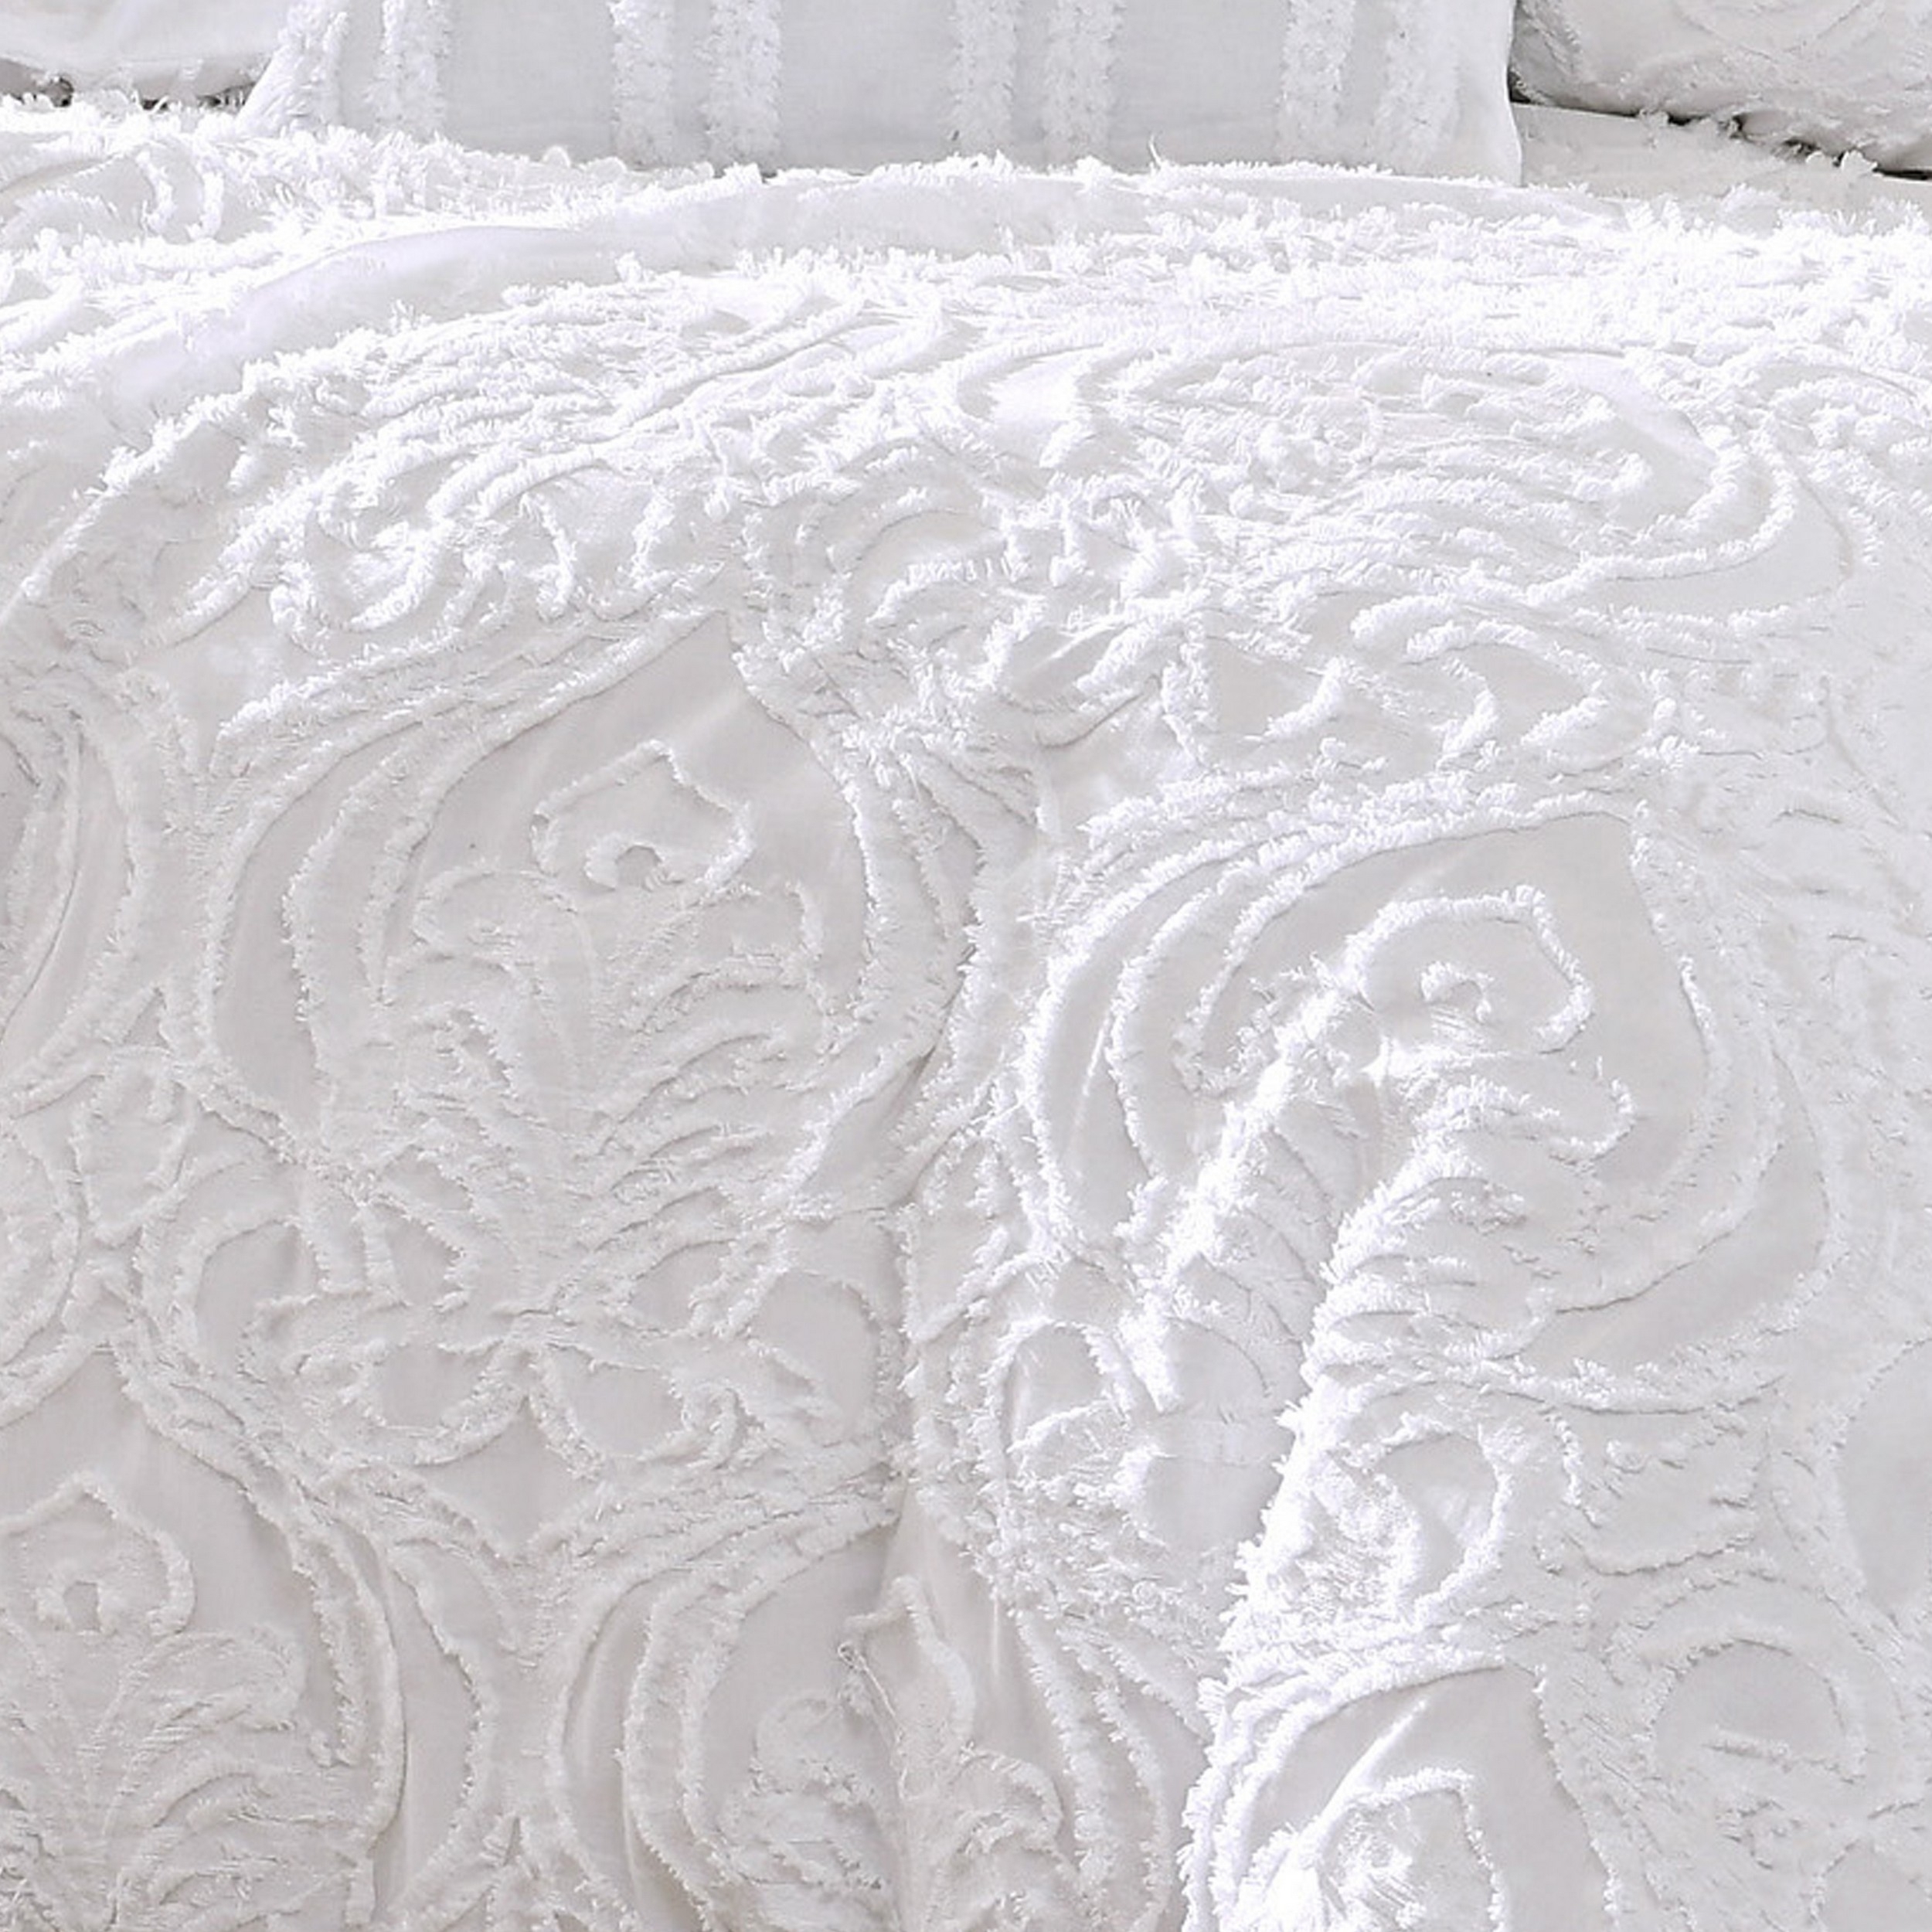 Kile Modern 6 Piece King Size Duvet Comforter Set, White Medallion Pattern - Saltoro Sherpi